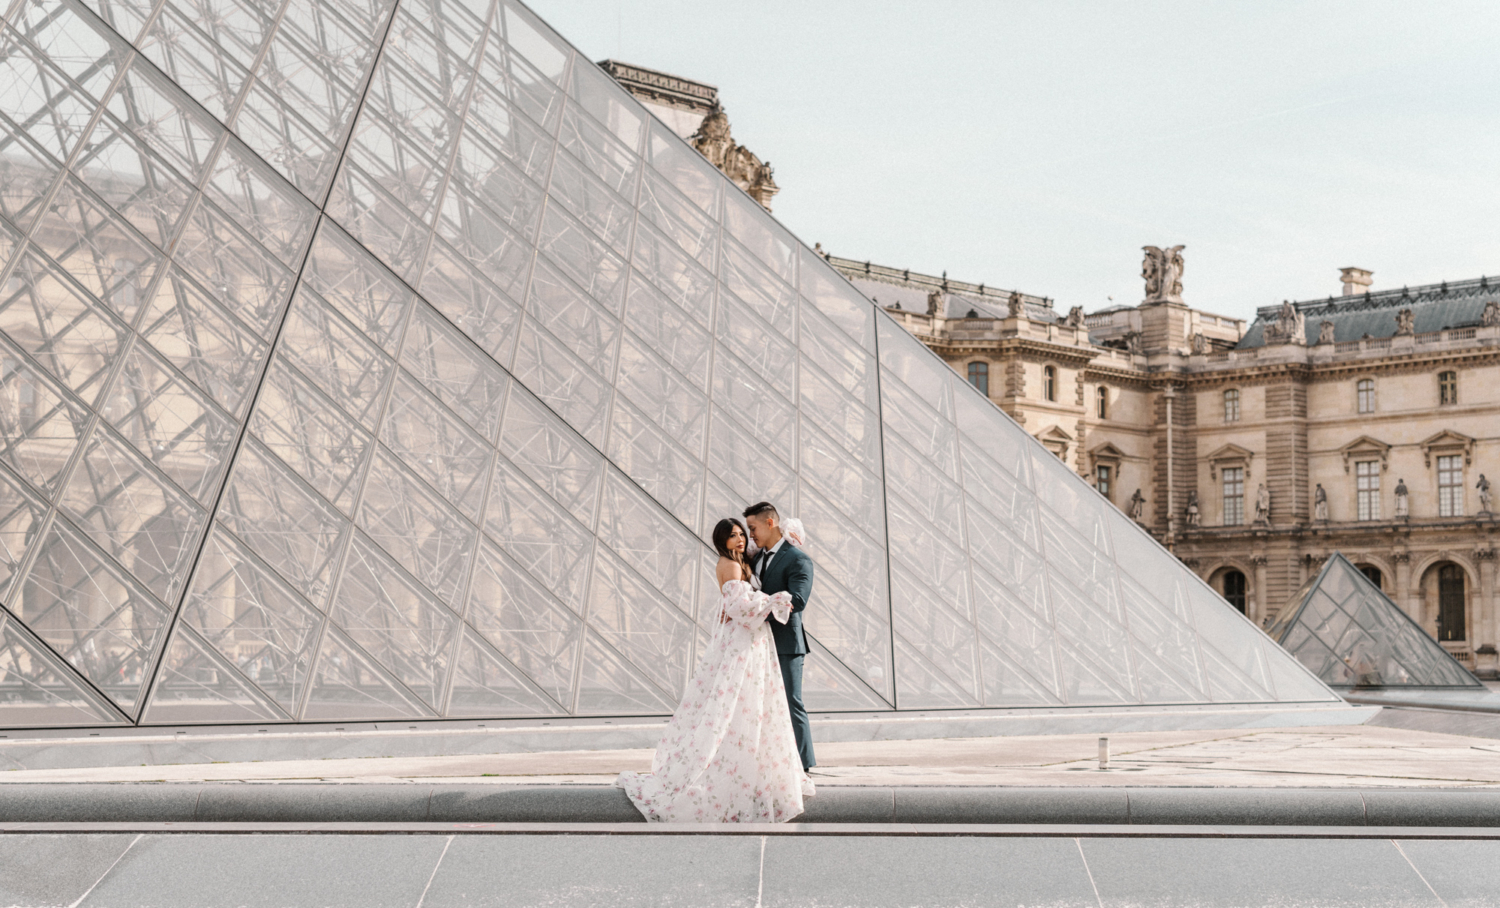 asian couple pose at glass pyramid at louvre museum paris